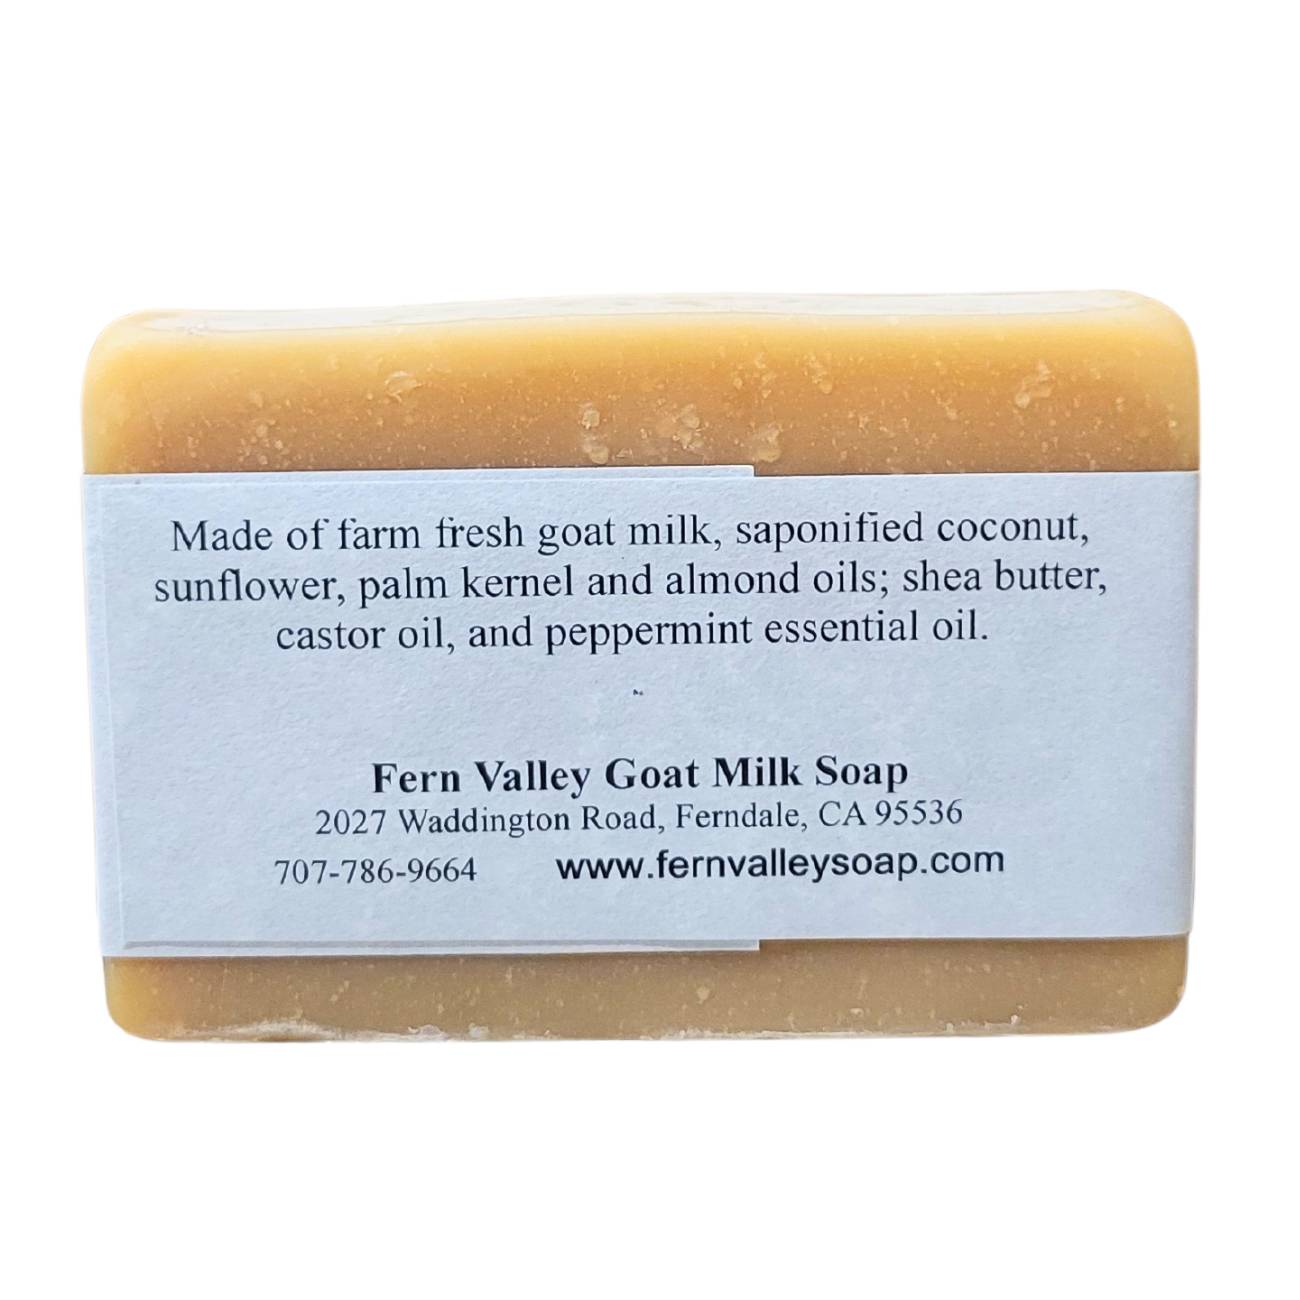 Handmade Goat Milk Soap | All Natural Peppermint